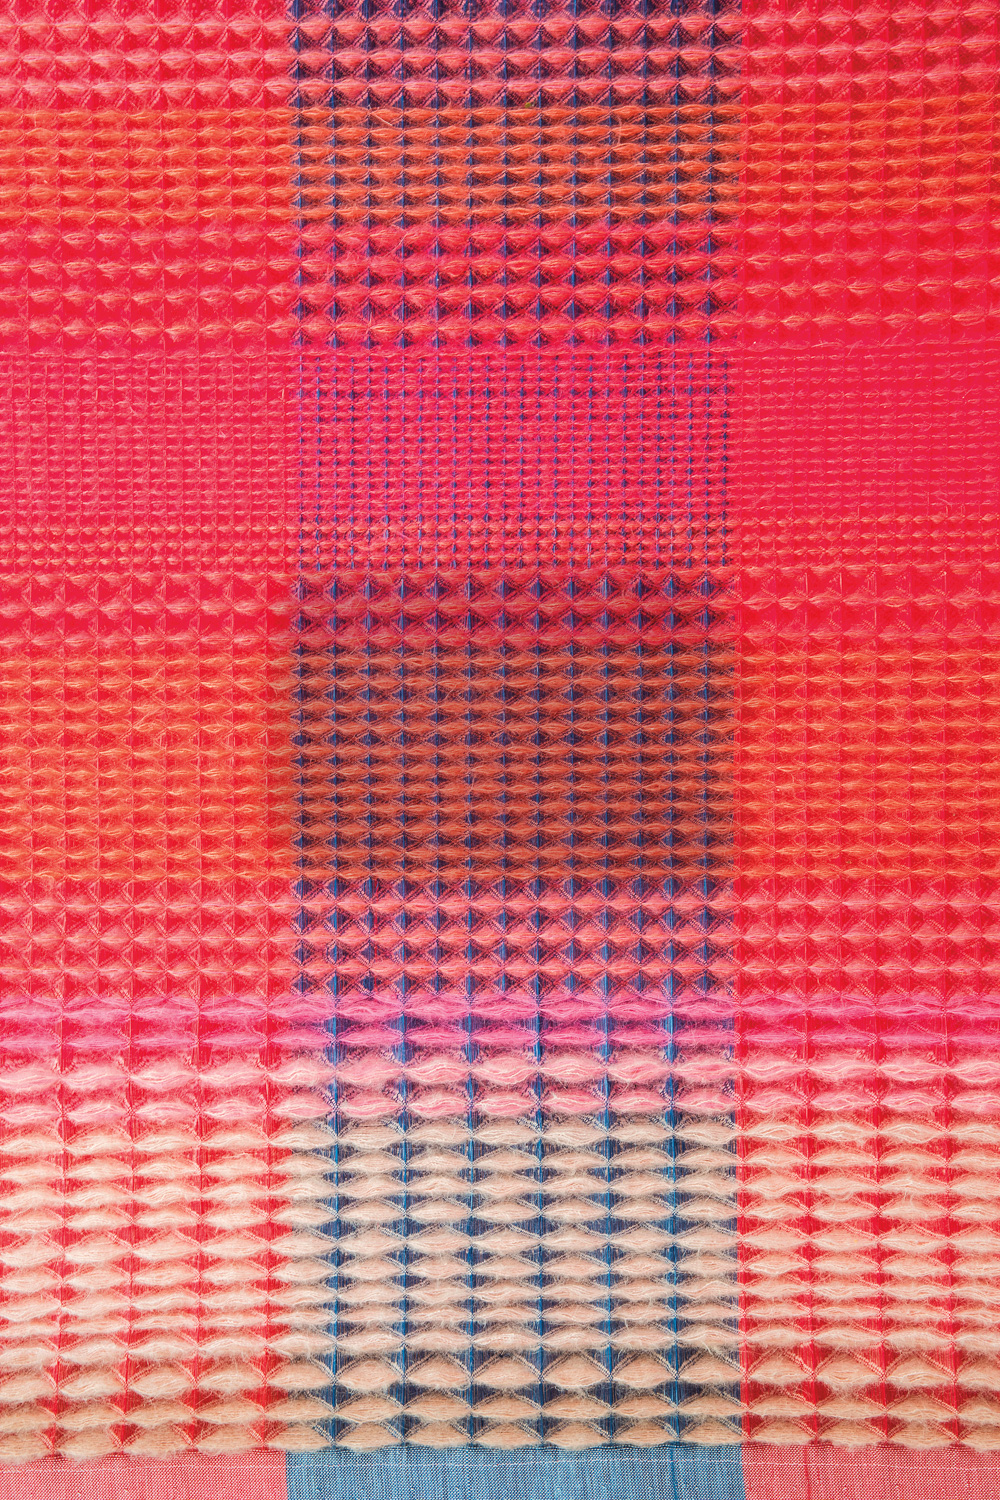 large weaving in a vivid color palette